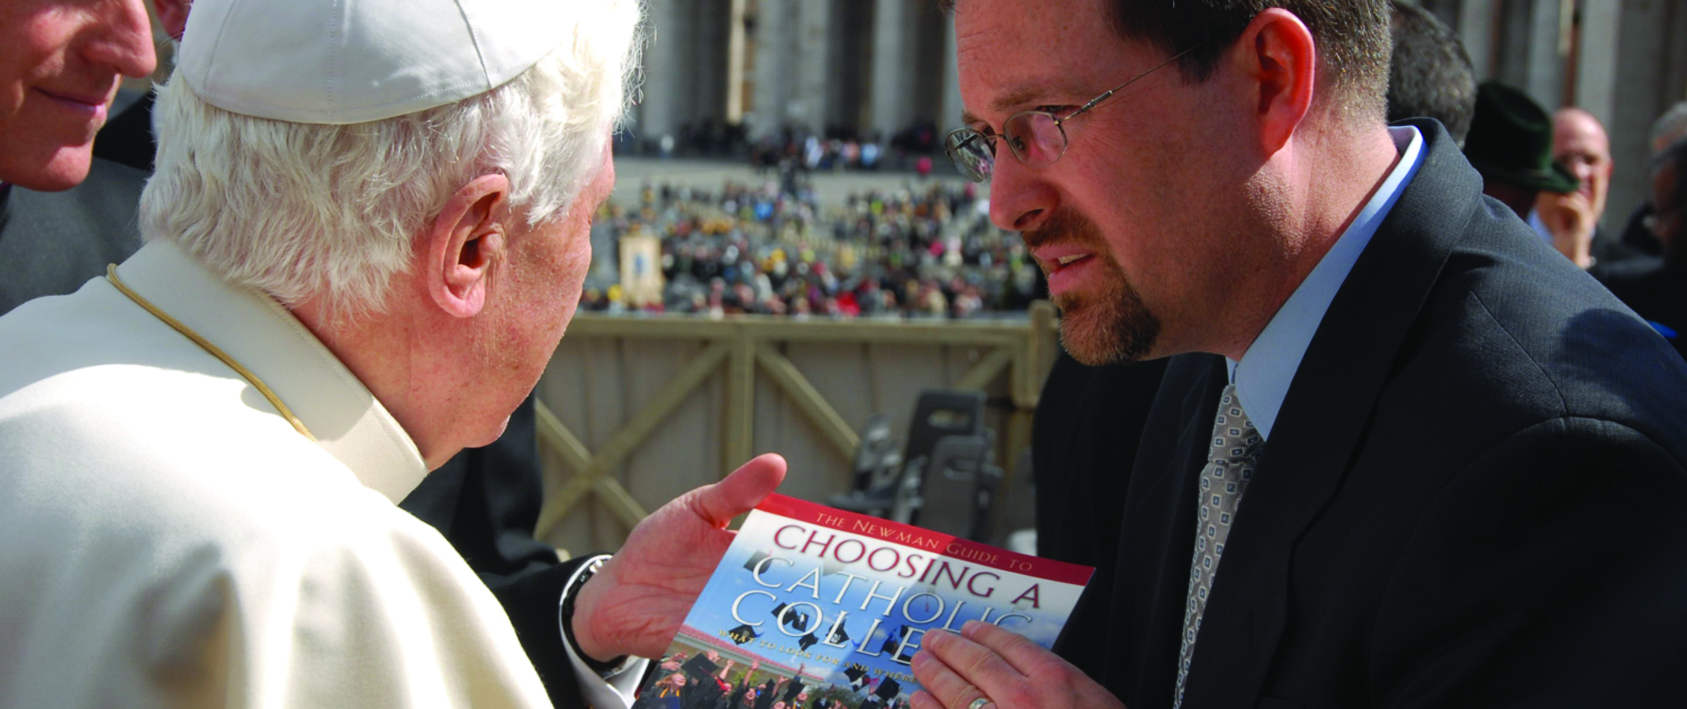 Discovering Authentic Catholic Education